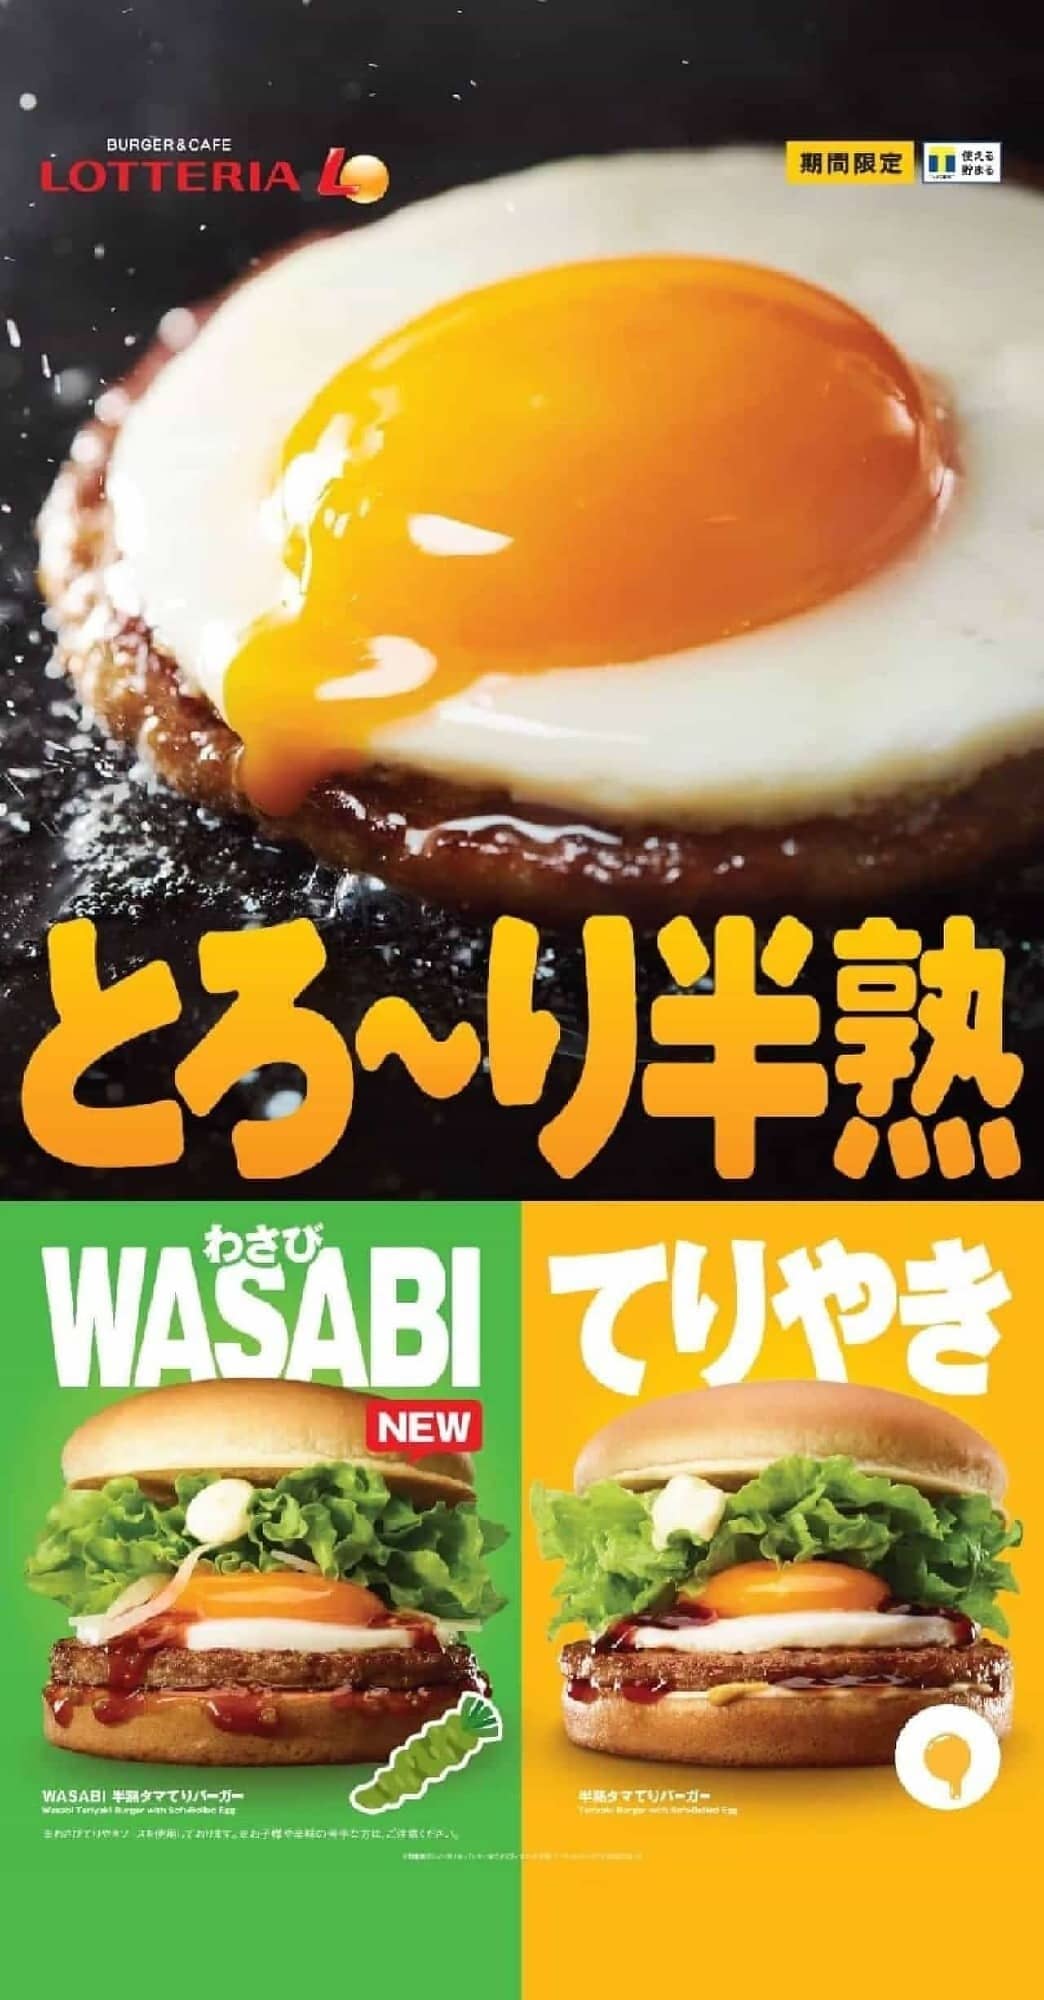 Lotteria "WASABI Half-boiled Tama Teriyaki Burger" and "WASABI Teriyaki Burger